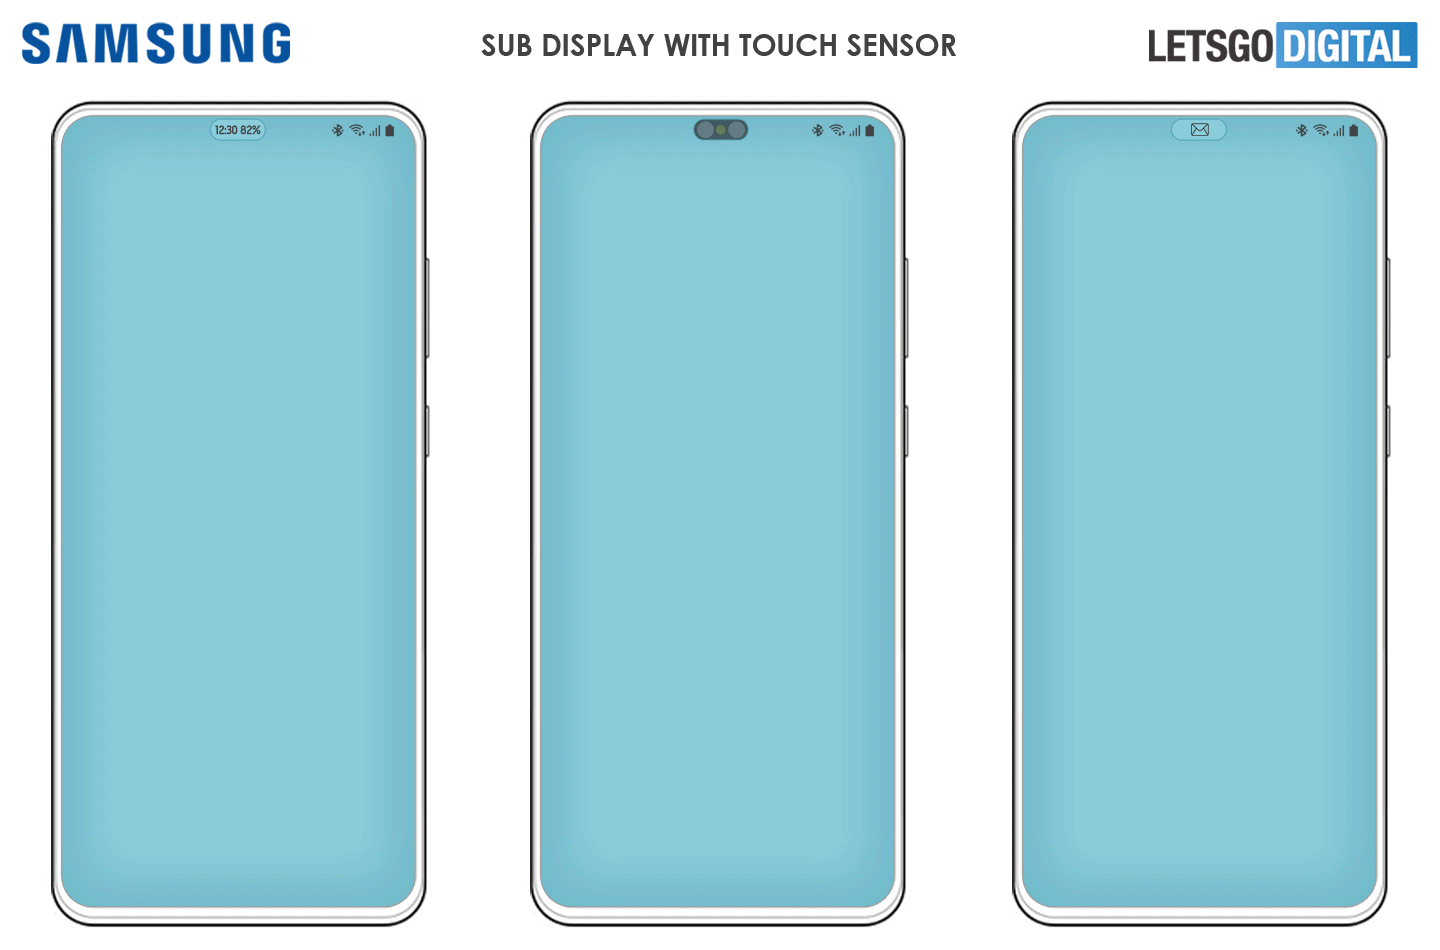 Samsung smartphone sub display